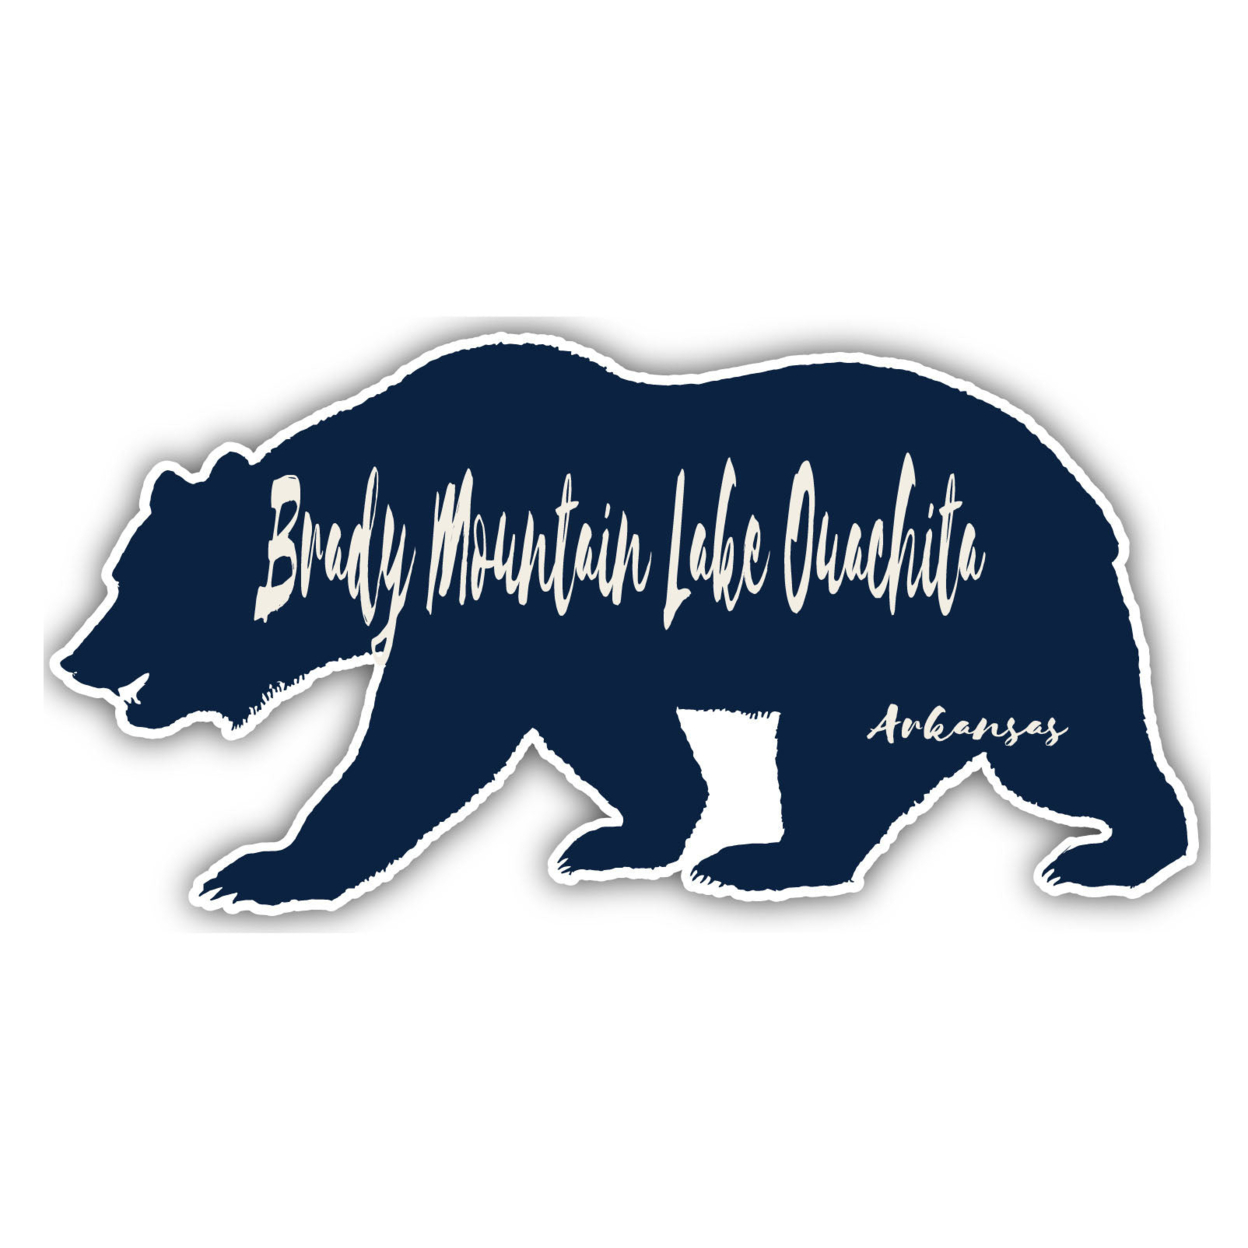 Brady Mountain Lake Ouachita Arkansas Souvenir Decorative Stickers (Choose Theme And Size) - 4-Pack, 12-Inch, Camp Life